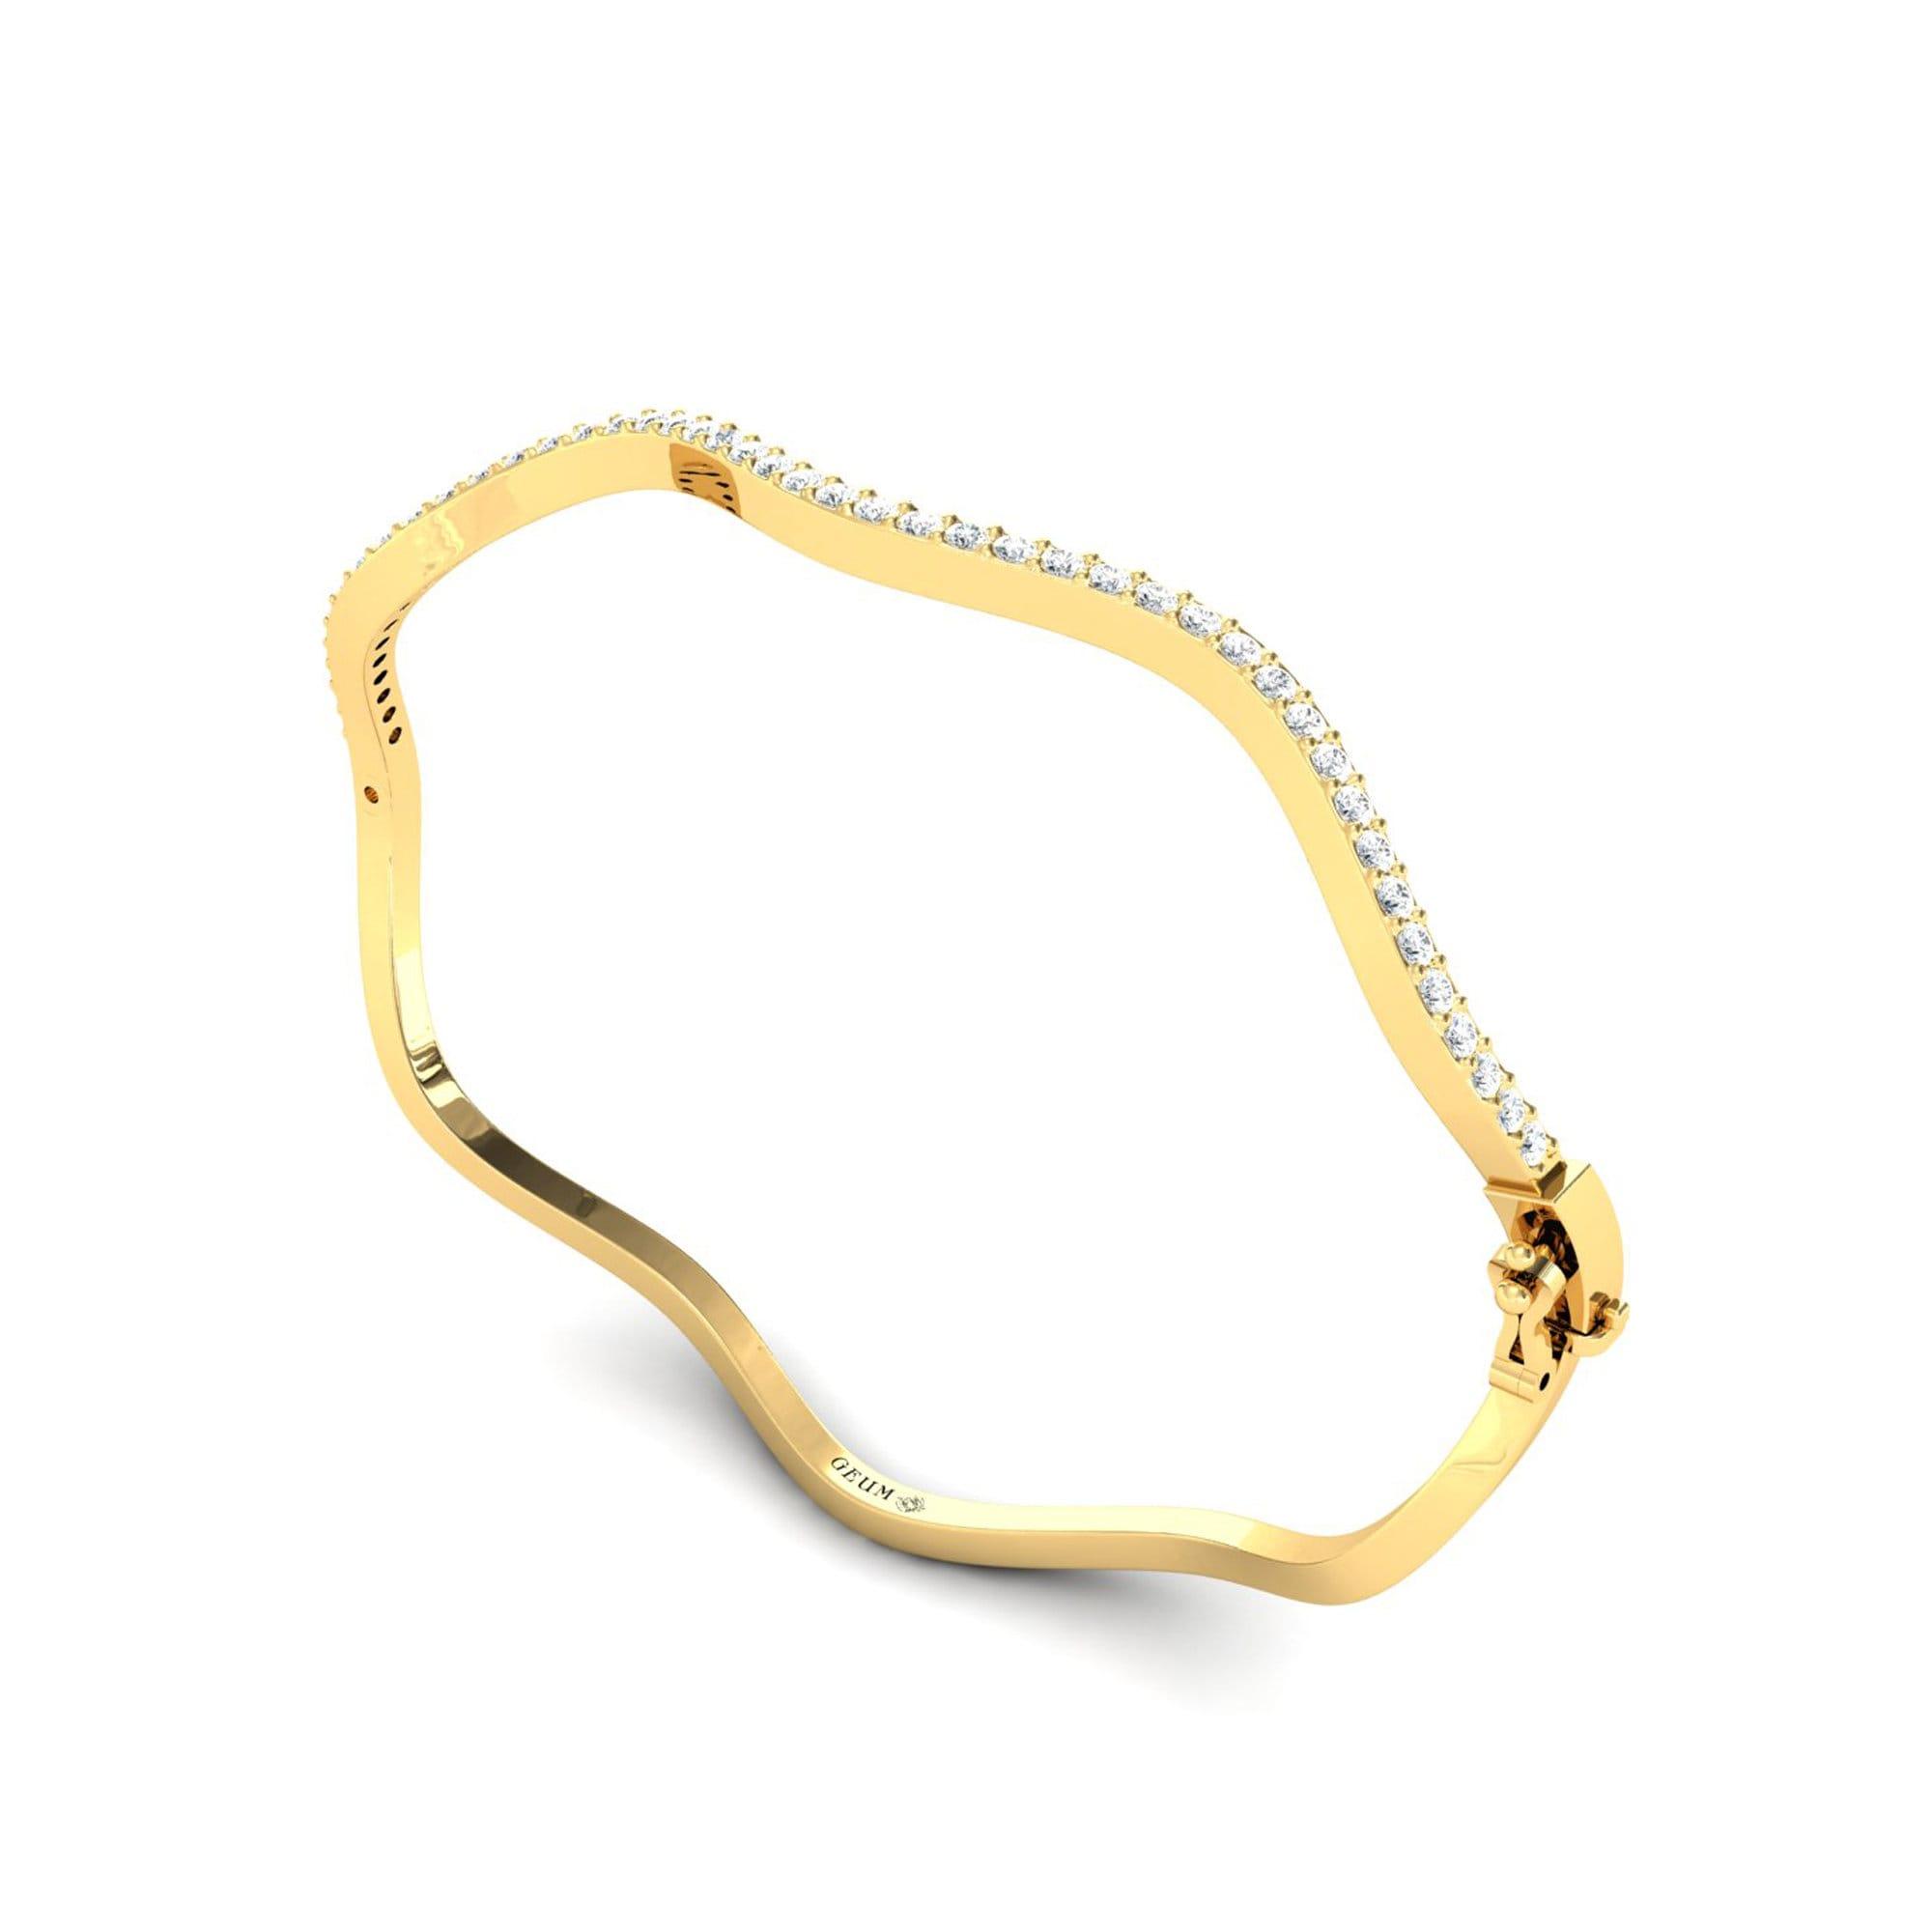 Elegant Diamond Cut Bracelet, Yellow/White Gold Custom Bracelet - GeumJewels